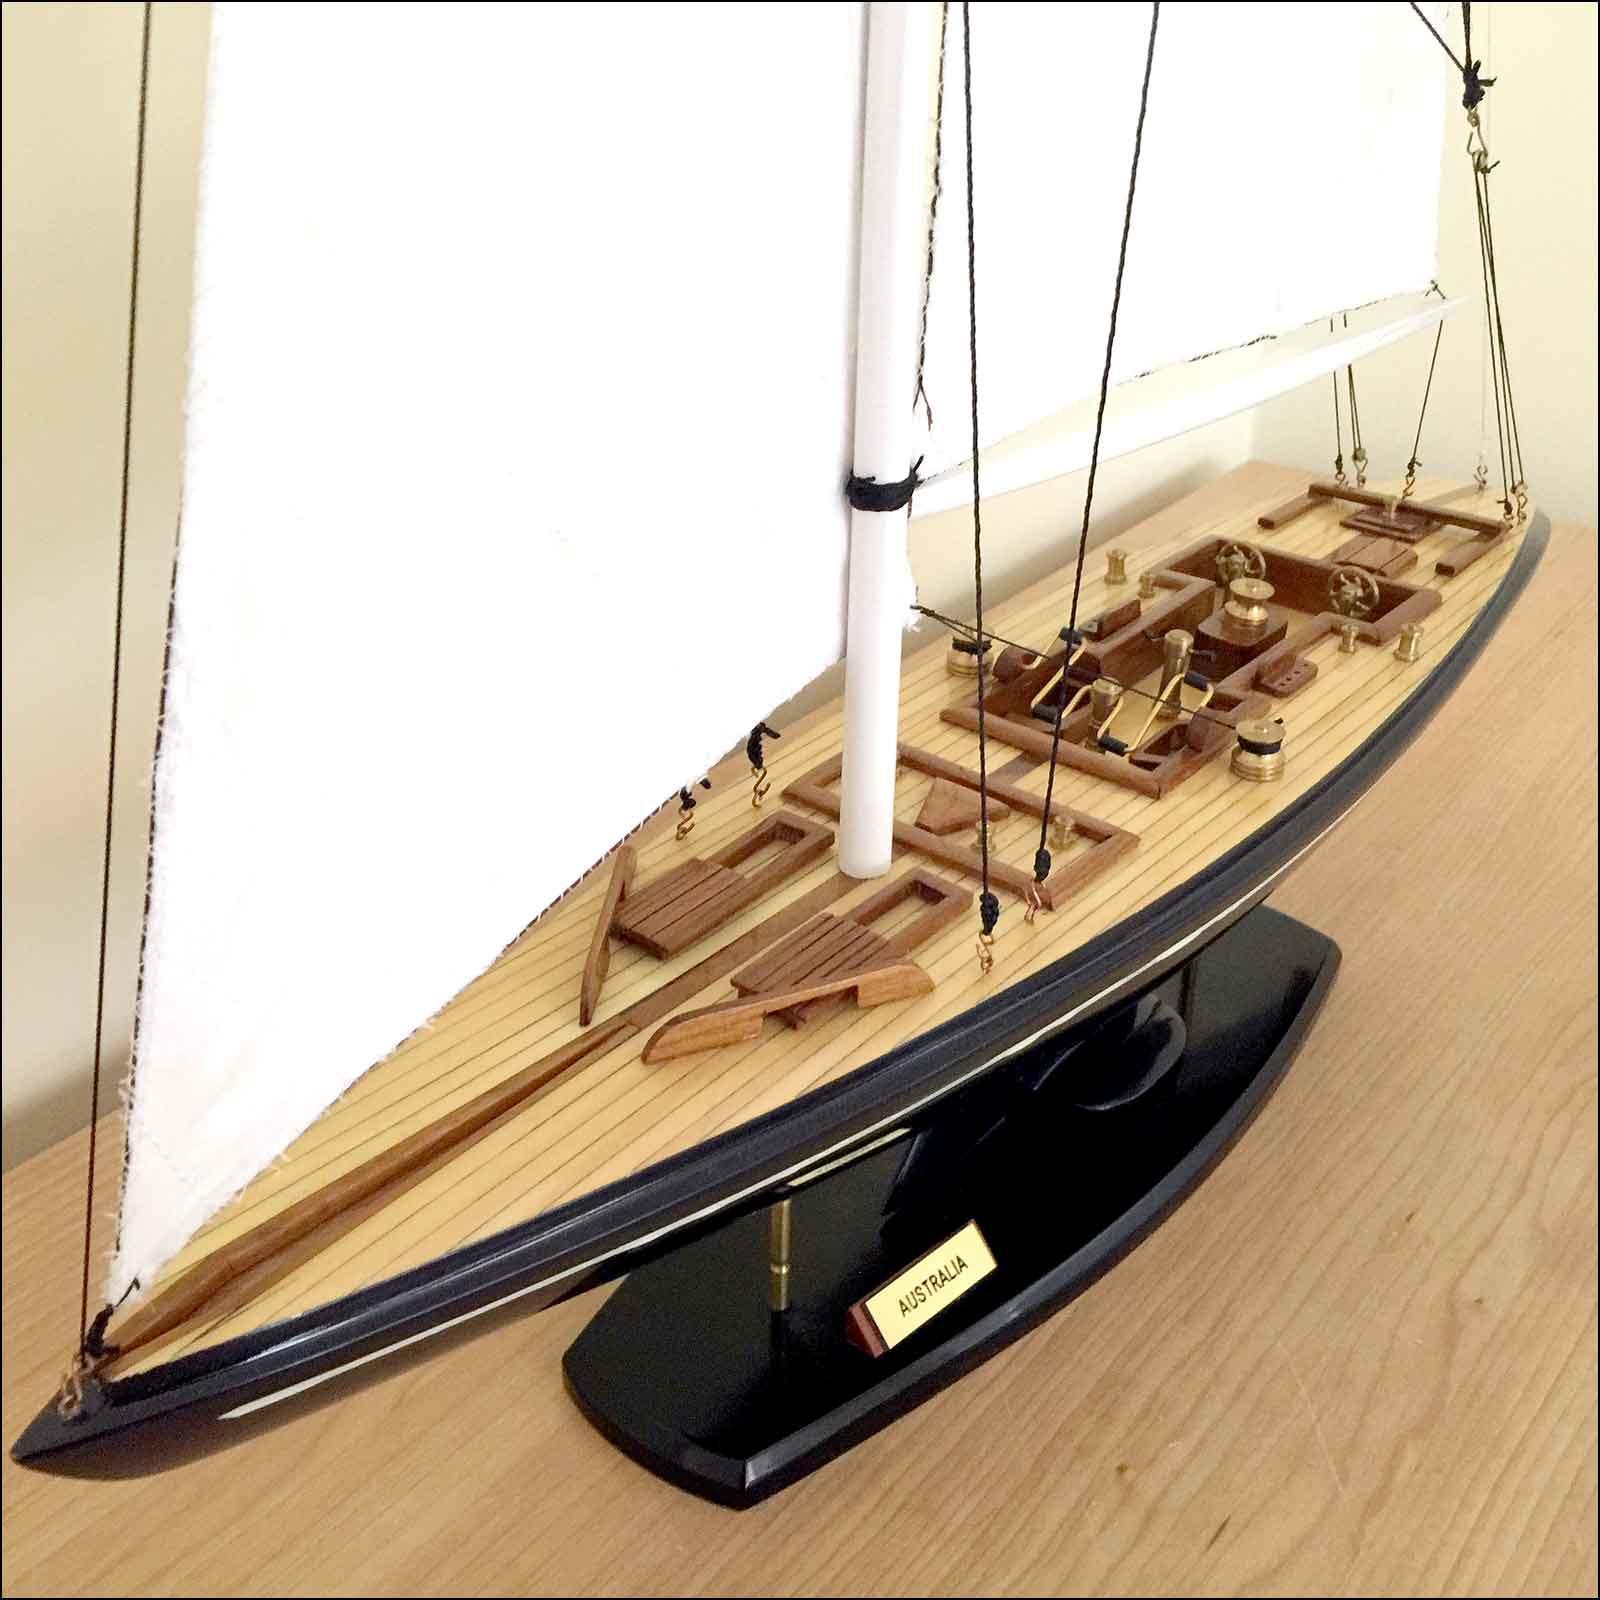 wooden model yachts Australia II